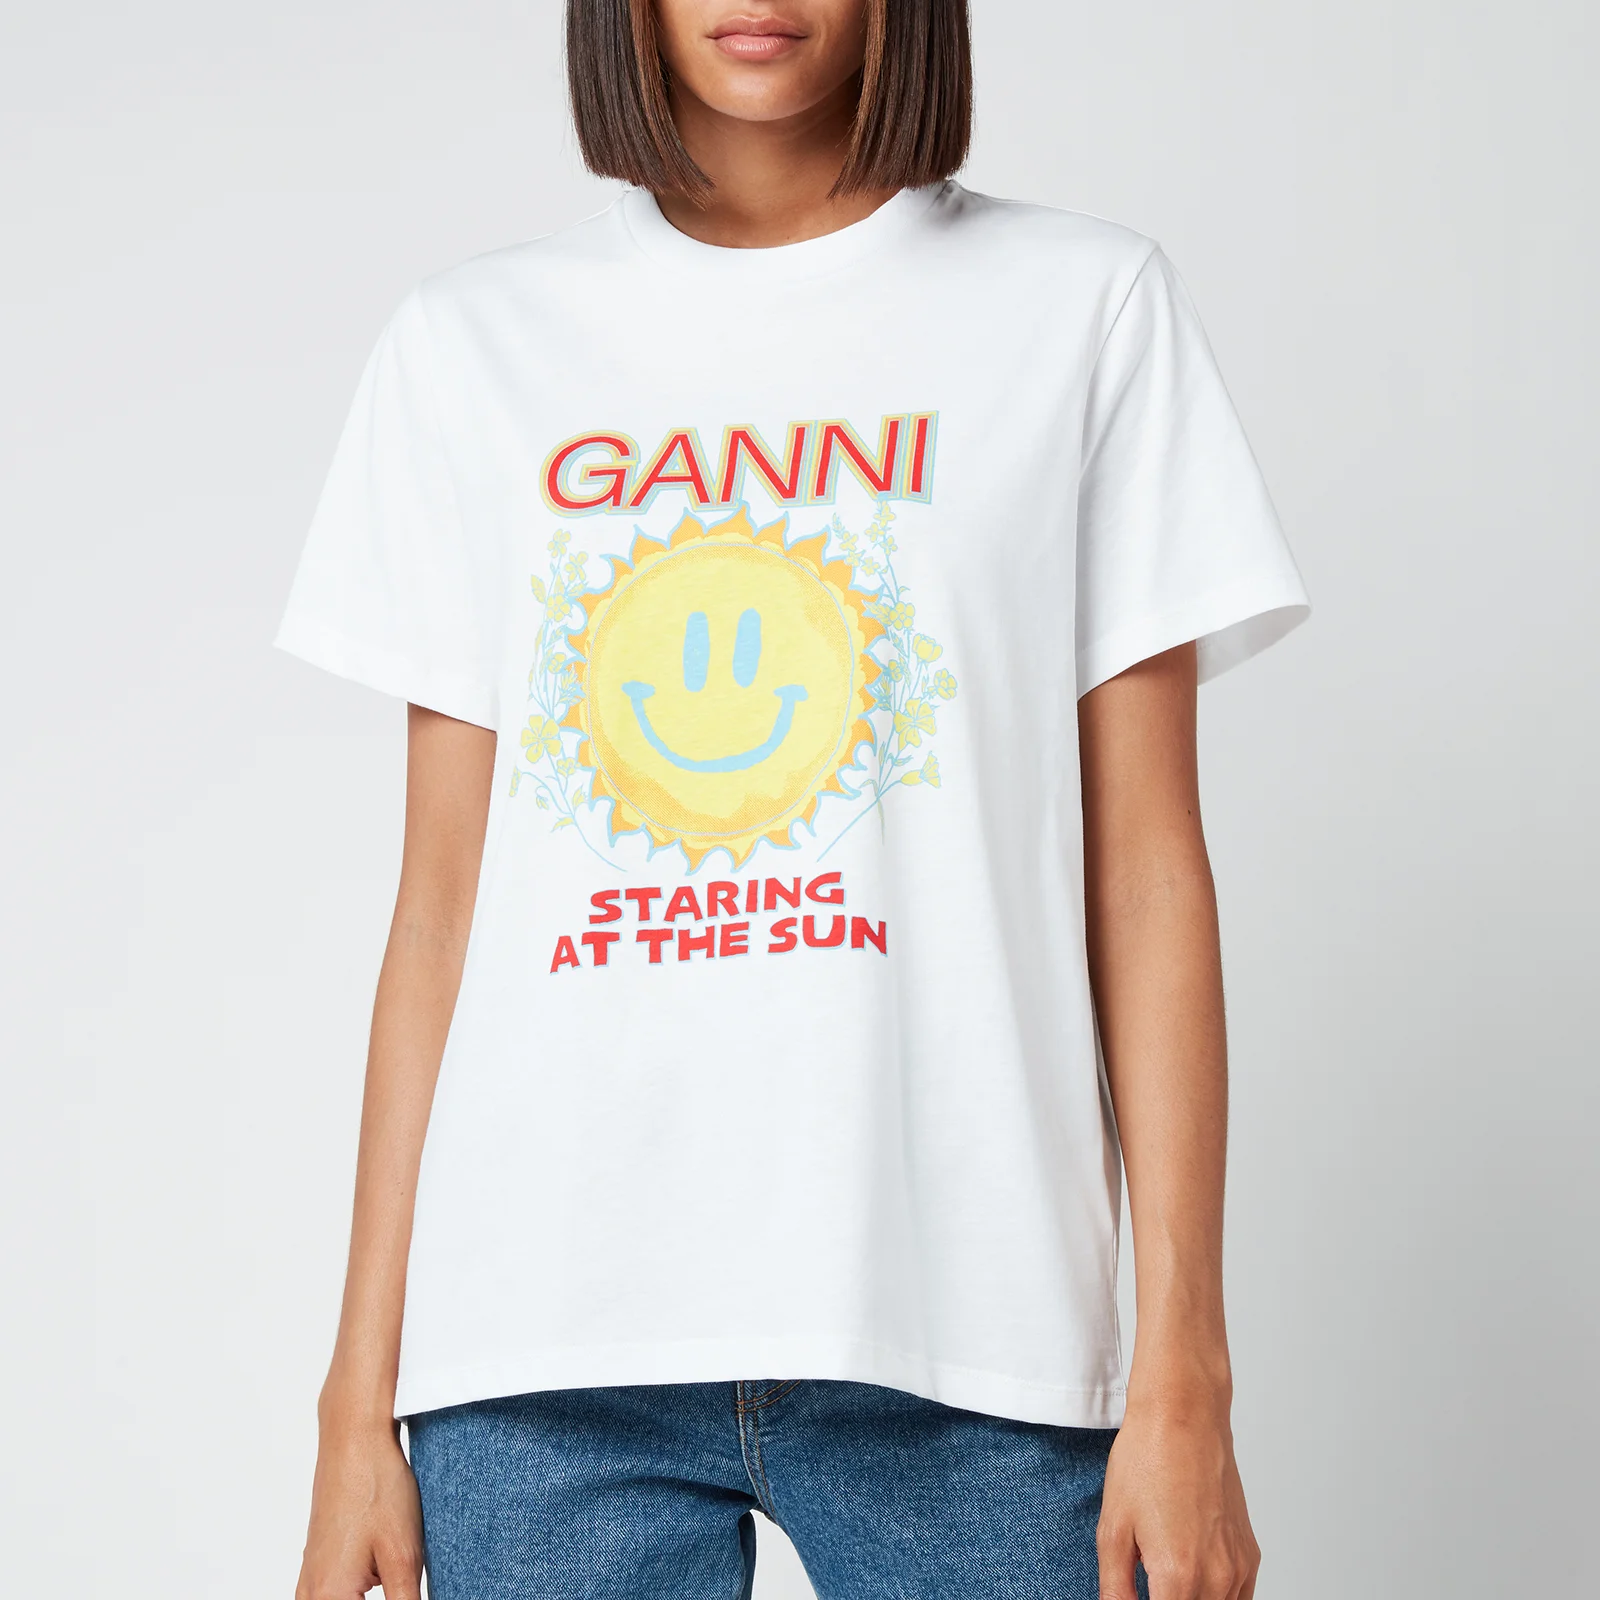 Ganni Women's Staring at the Sun T-Shirt - White Image 1